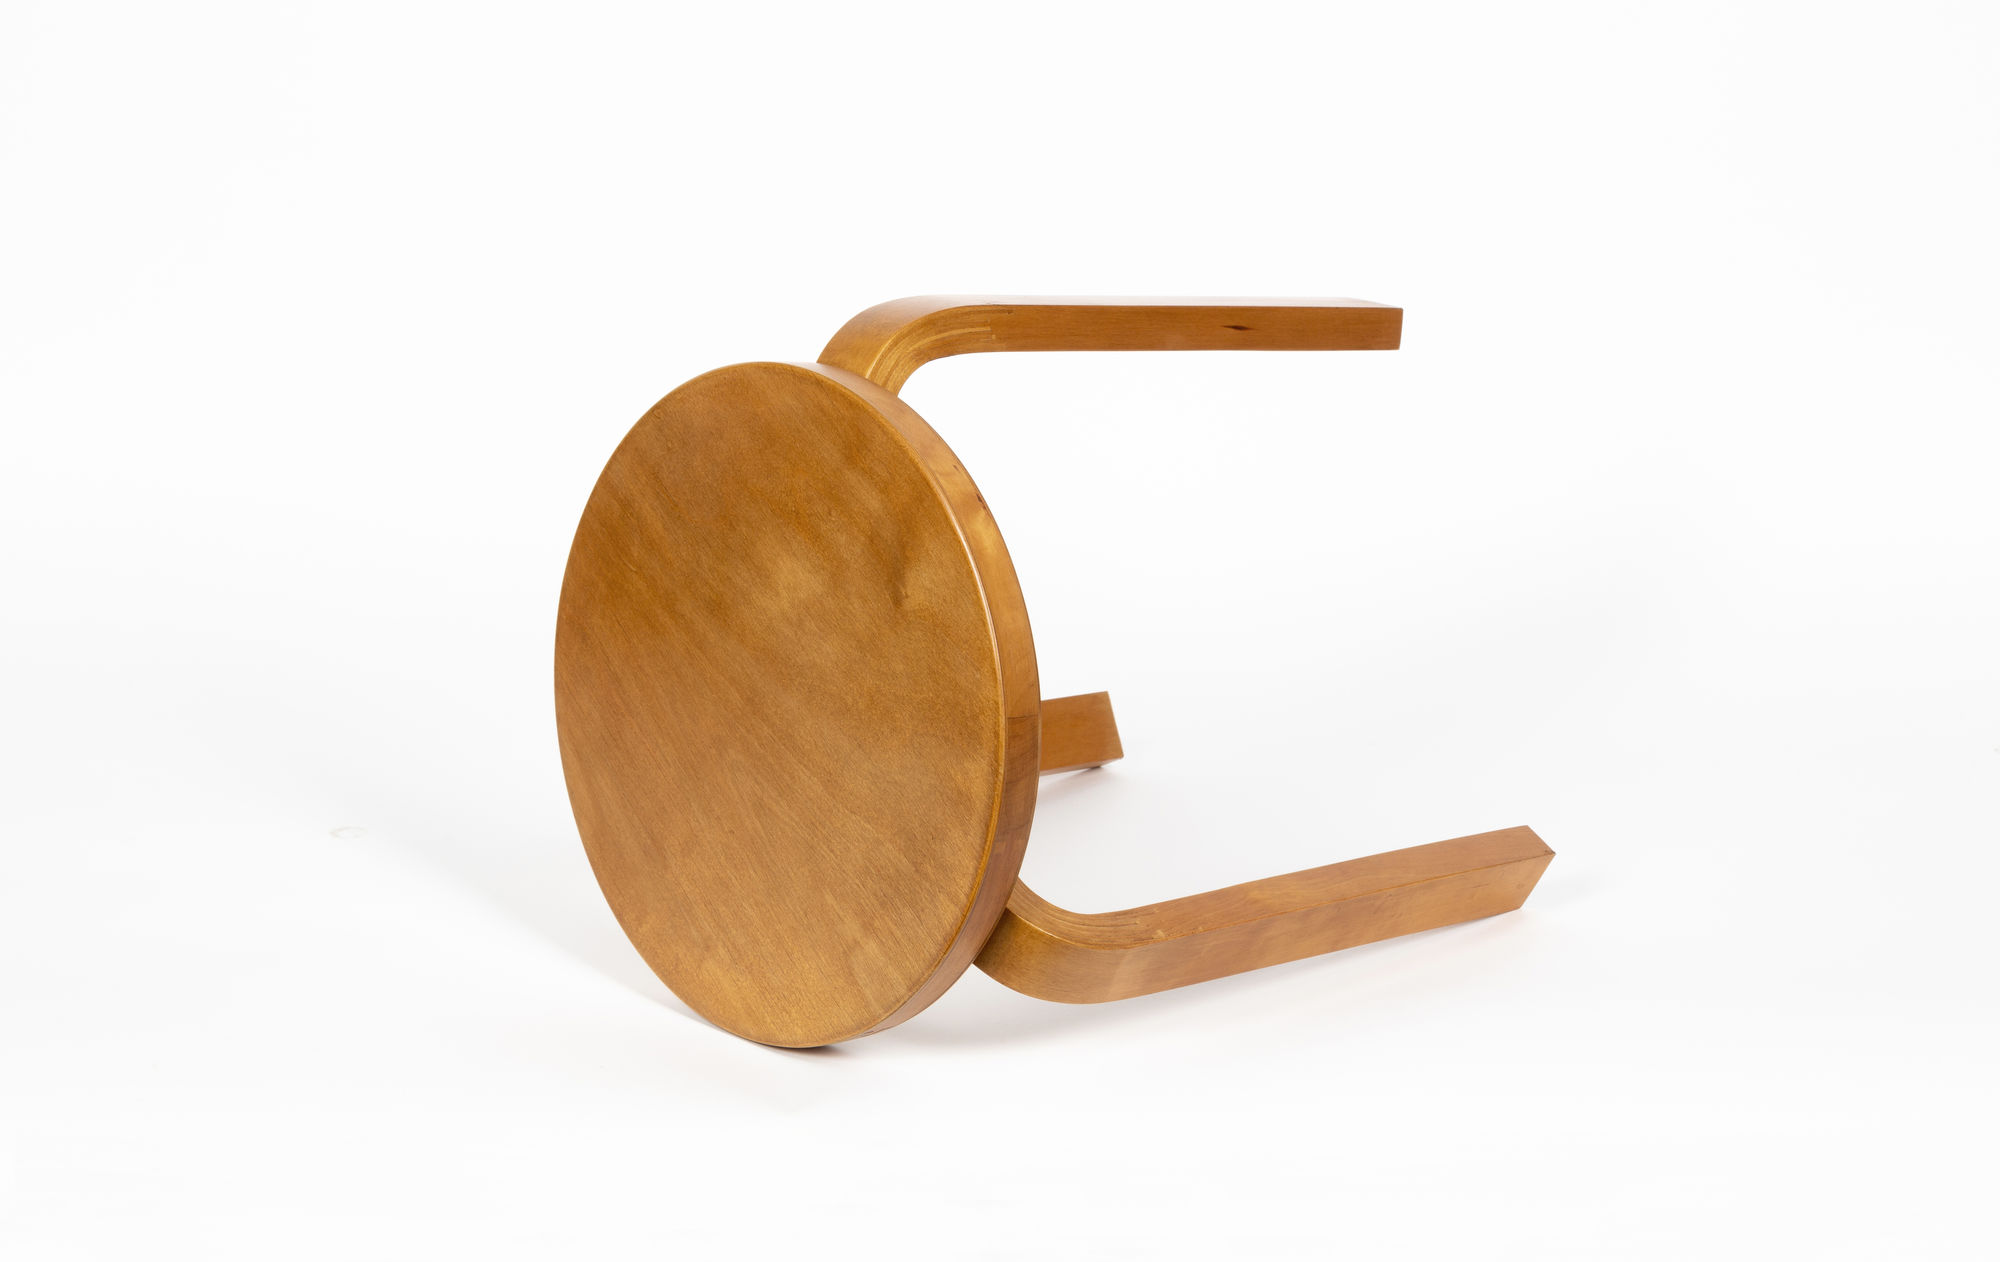 Alvar Aalto stools